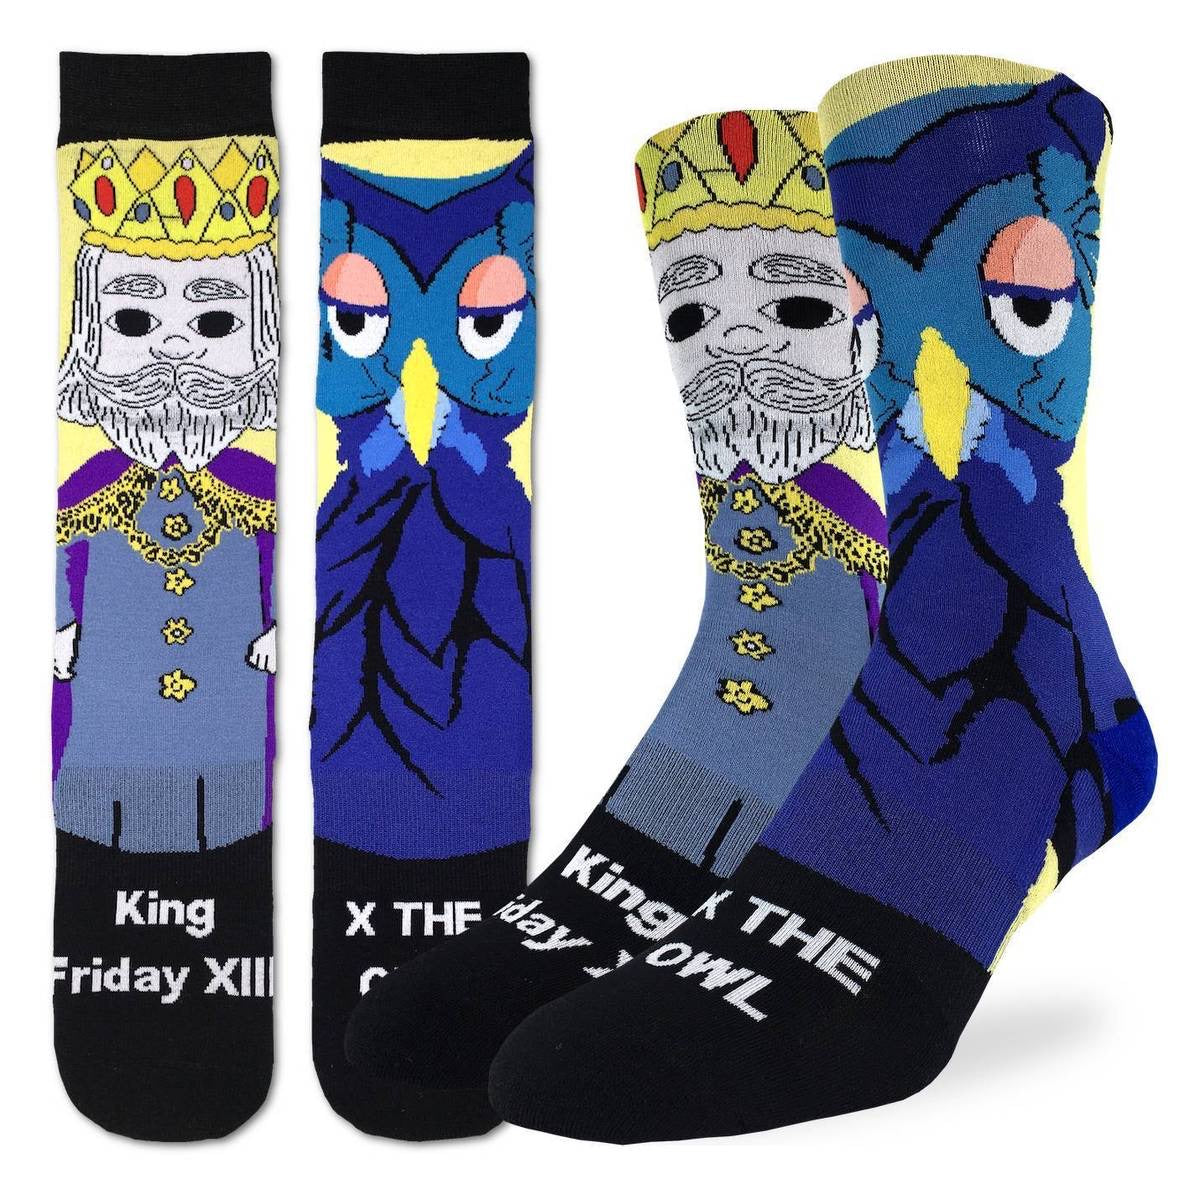 King Friday Socks